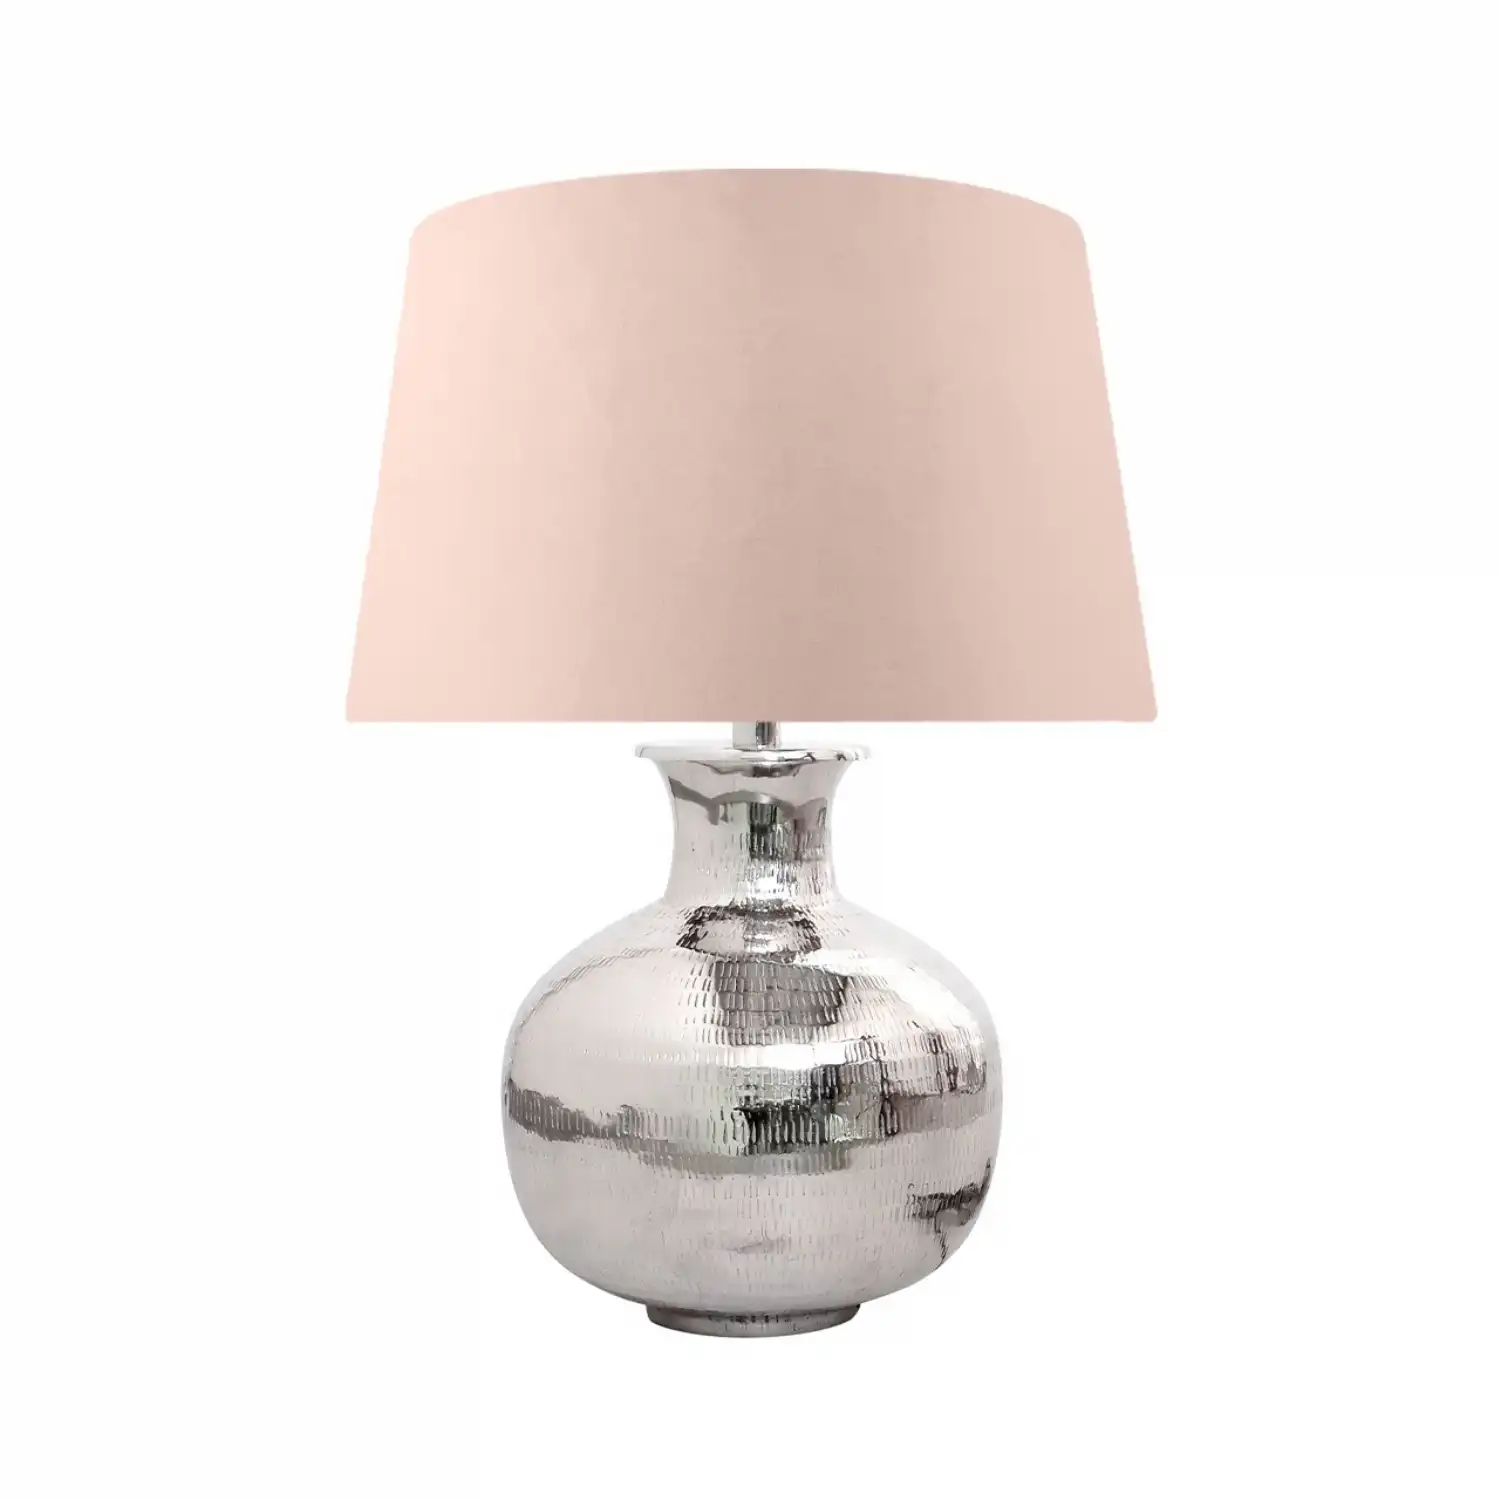 Nickel Round Table Lamp Pink Fabric Drum Shade